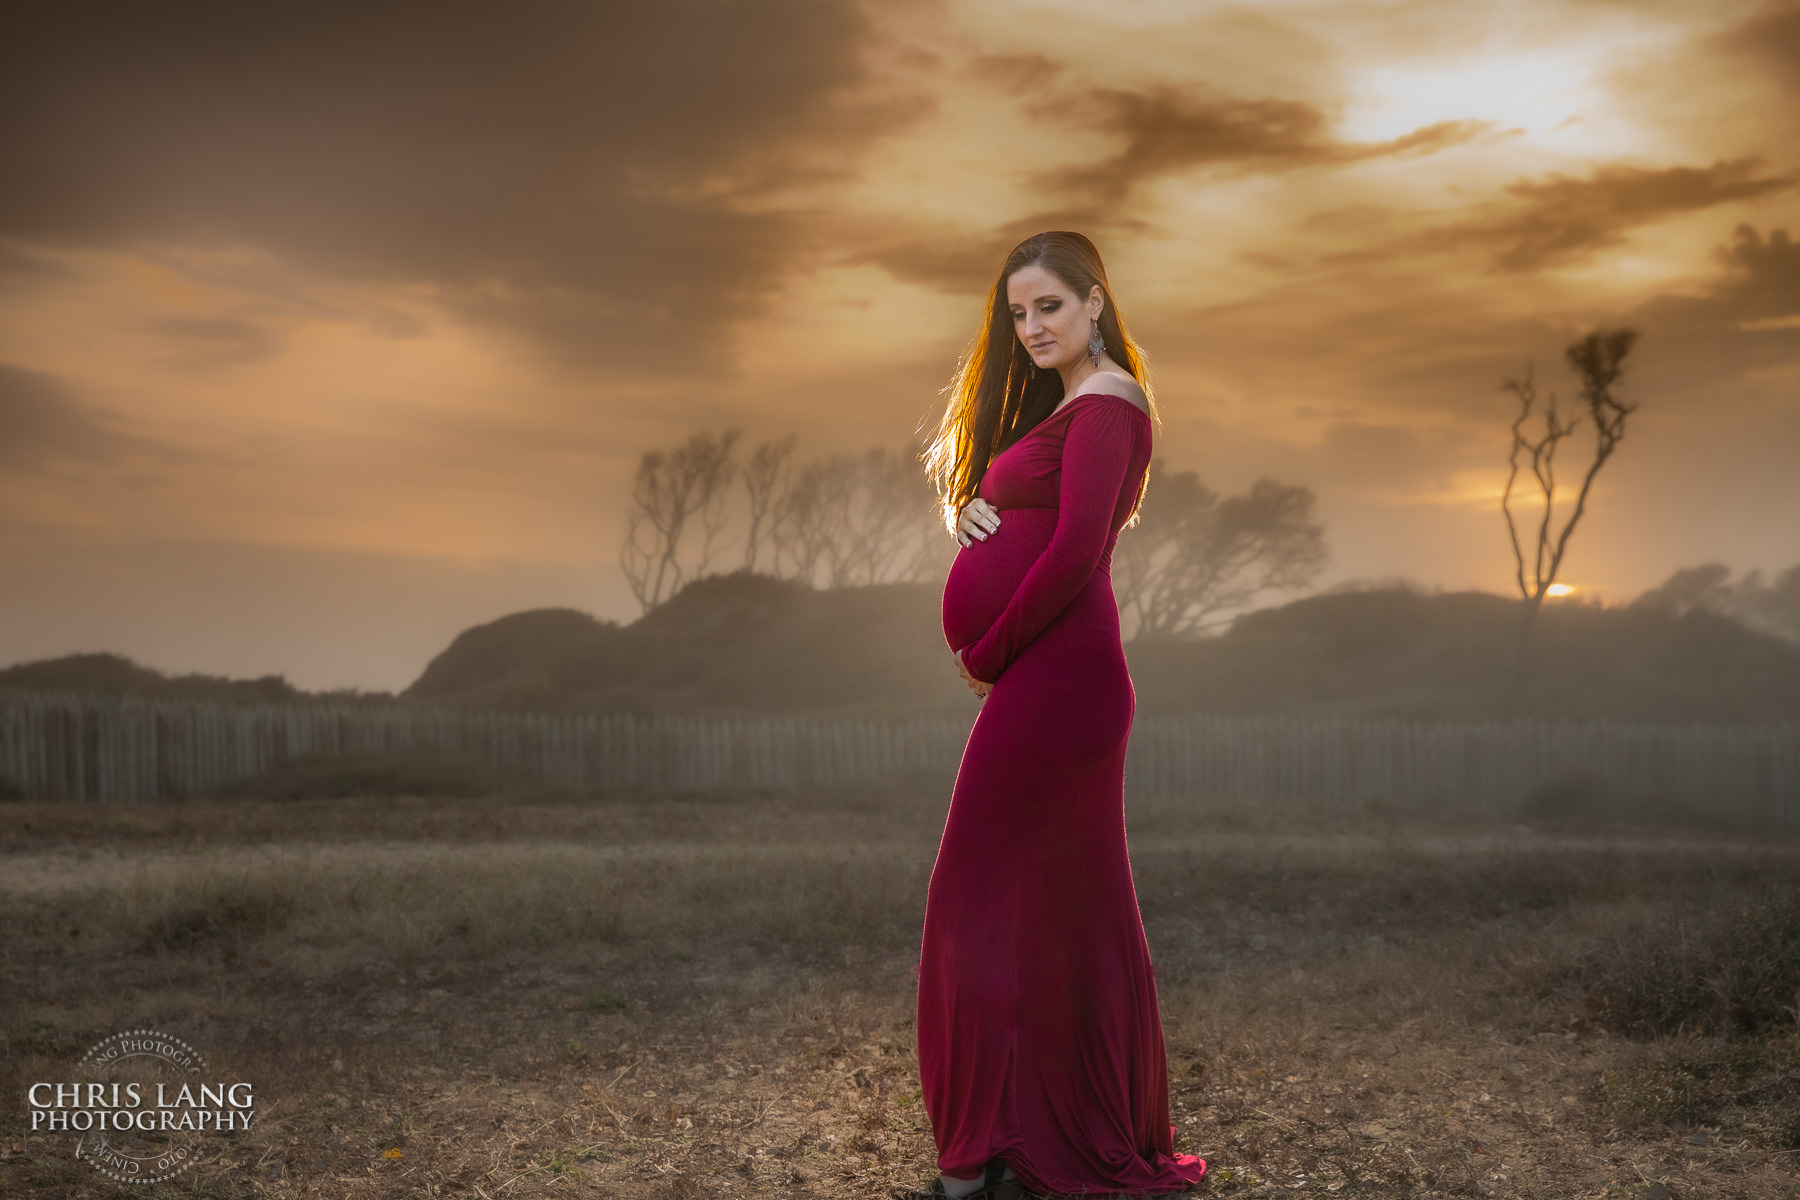 Ctreative Maternity photop - sunet - Ft Fisher - baby bump photo -  Wilmington NC maternity photographers - Chris Lang Photography -  pregnancy photos -  maternity photo ideas - 